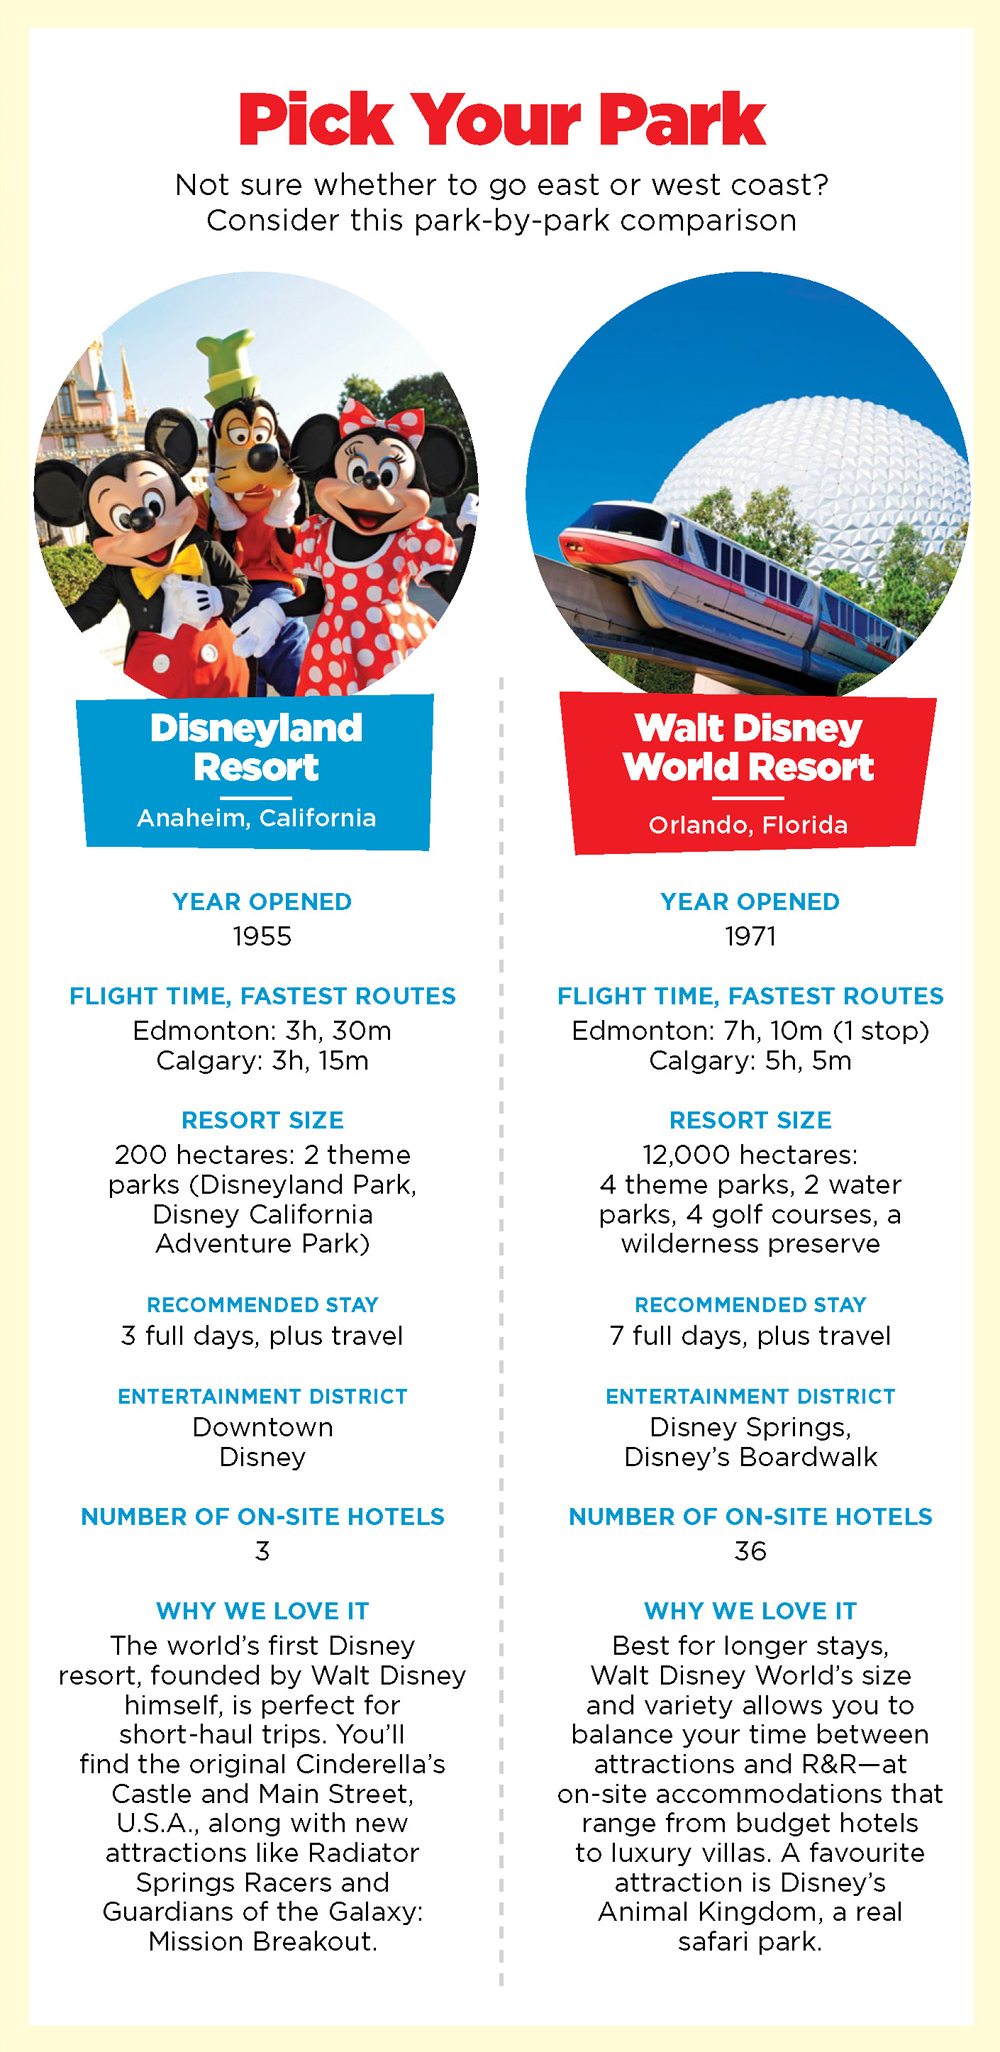 Infographic showing features of Disneyland Resort and Walt Disney World Resort.